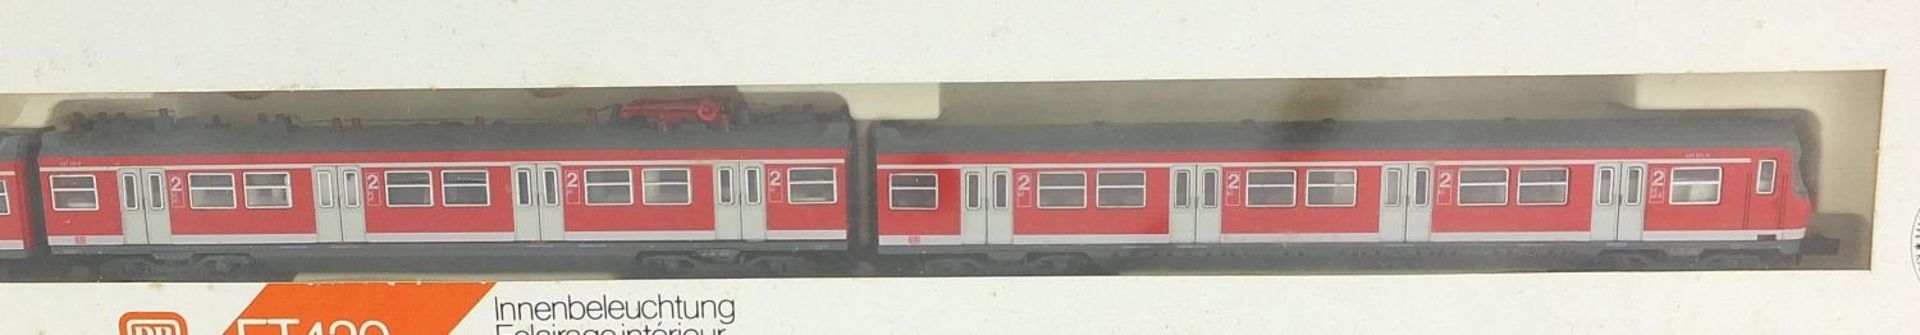 Arnold ET420 N gauge model railway three car set with box, number 2944 - Image 3 of 3